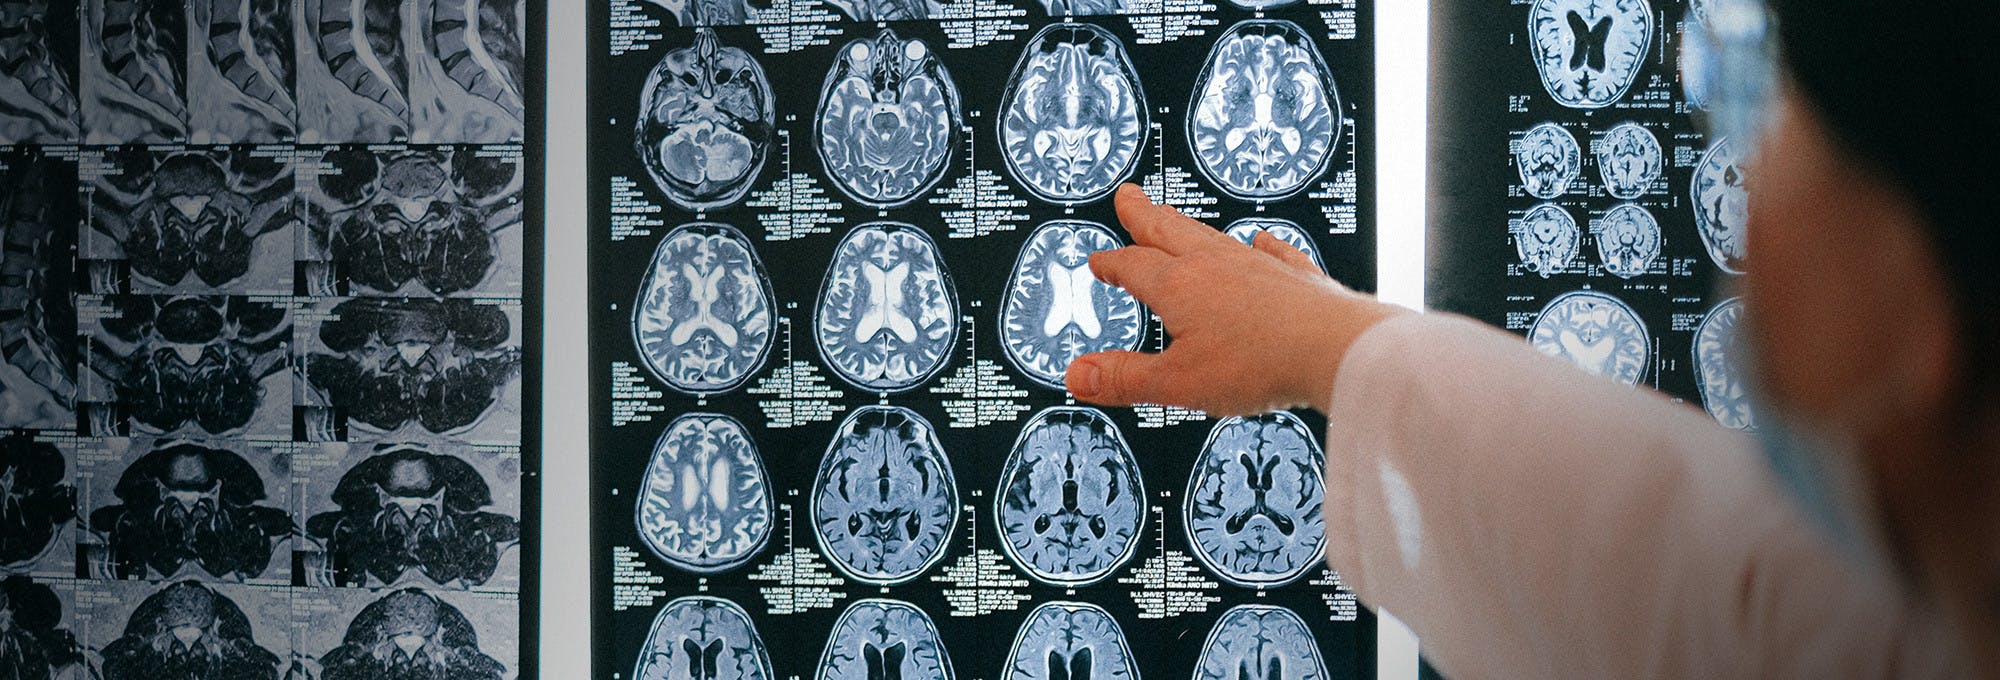 MRI technician looking at head and brain imaging